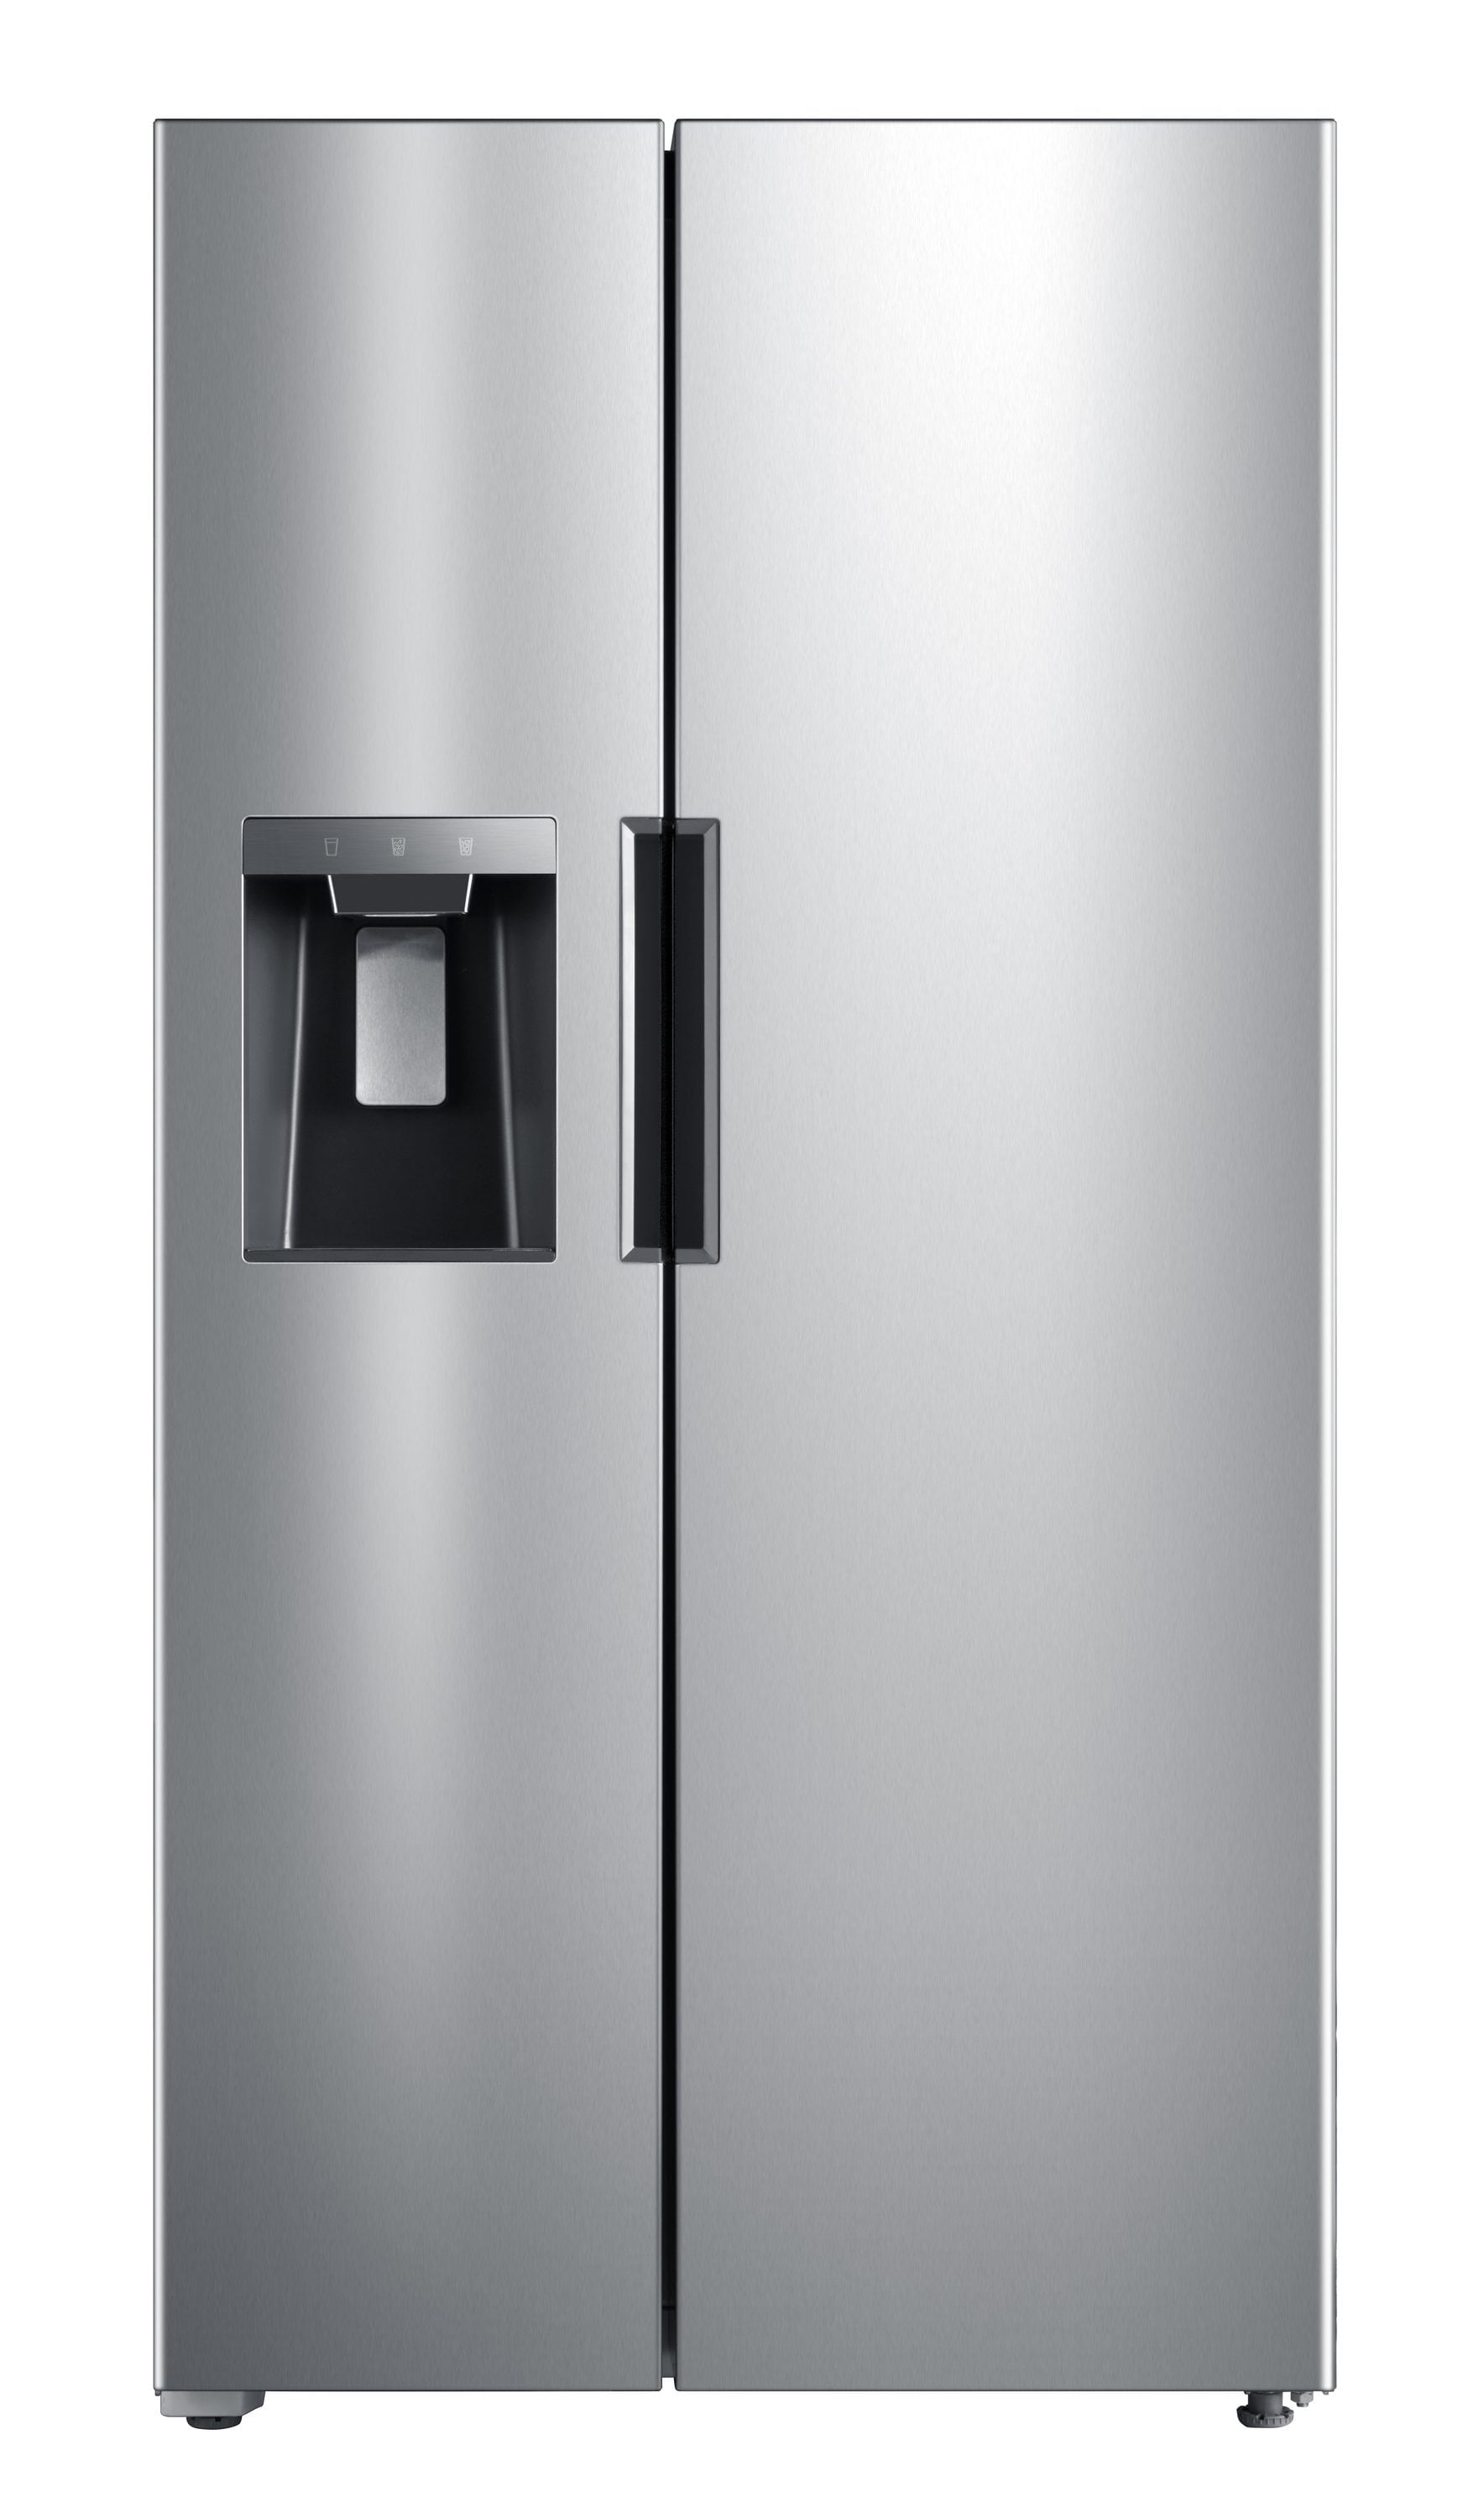 Midea 4.5 Cu Ft Refrigerator Reviews: Cool Elegance!